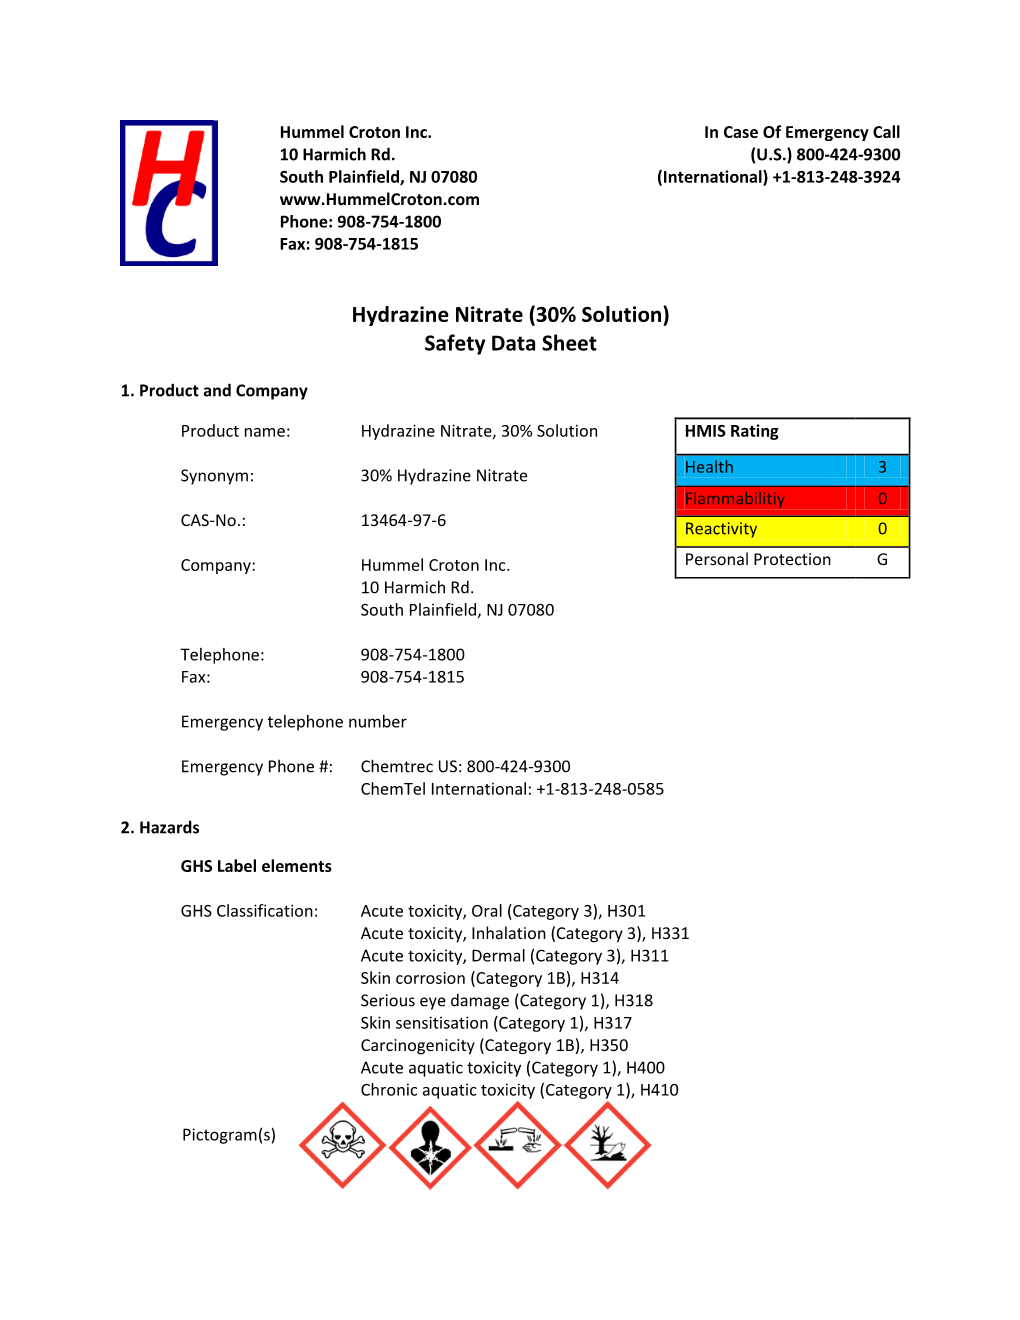 Hydrazine Nitrate (30% Solution) Safety Data Sheet